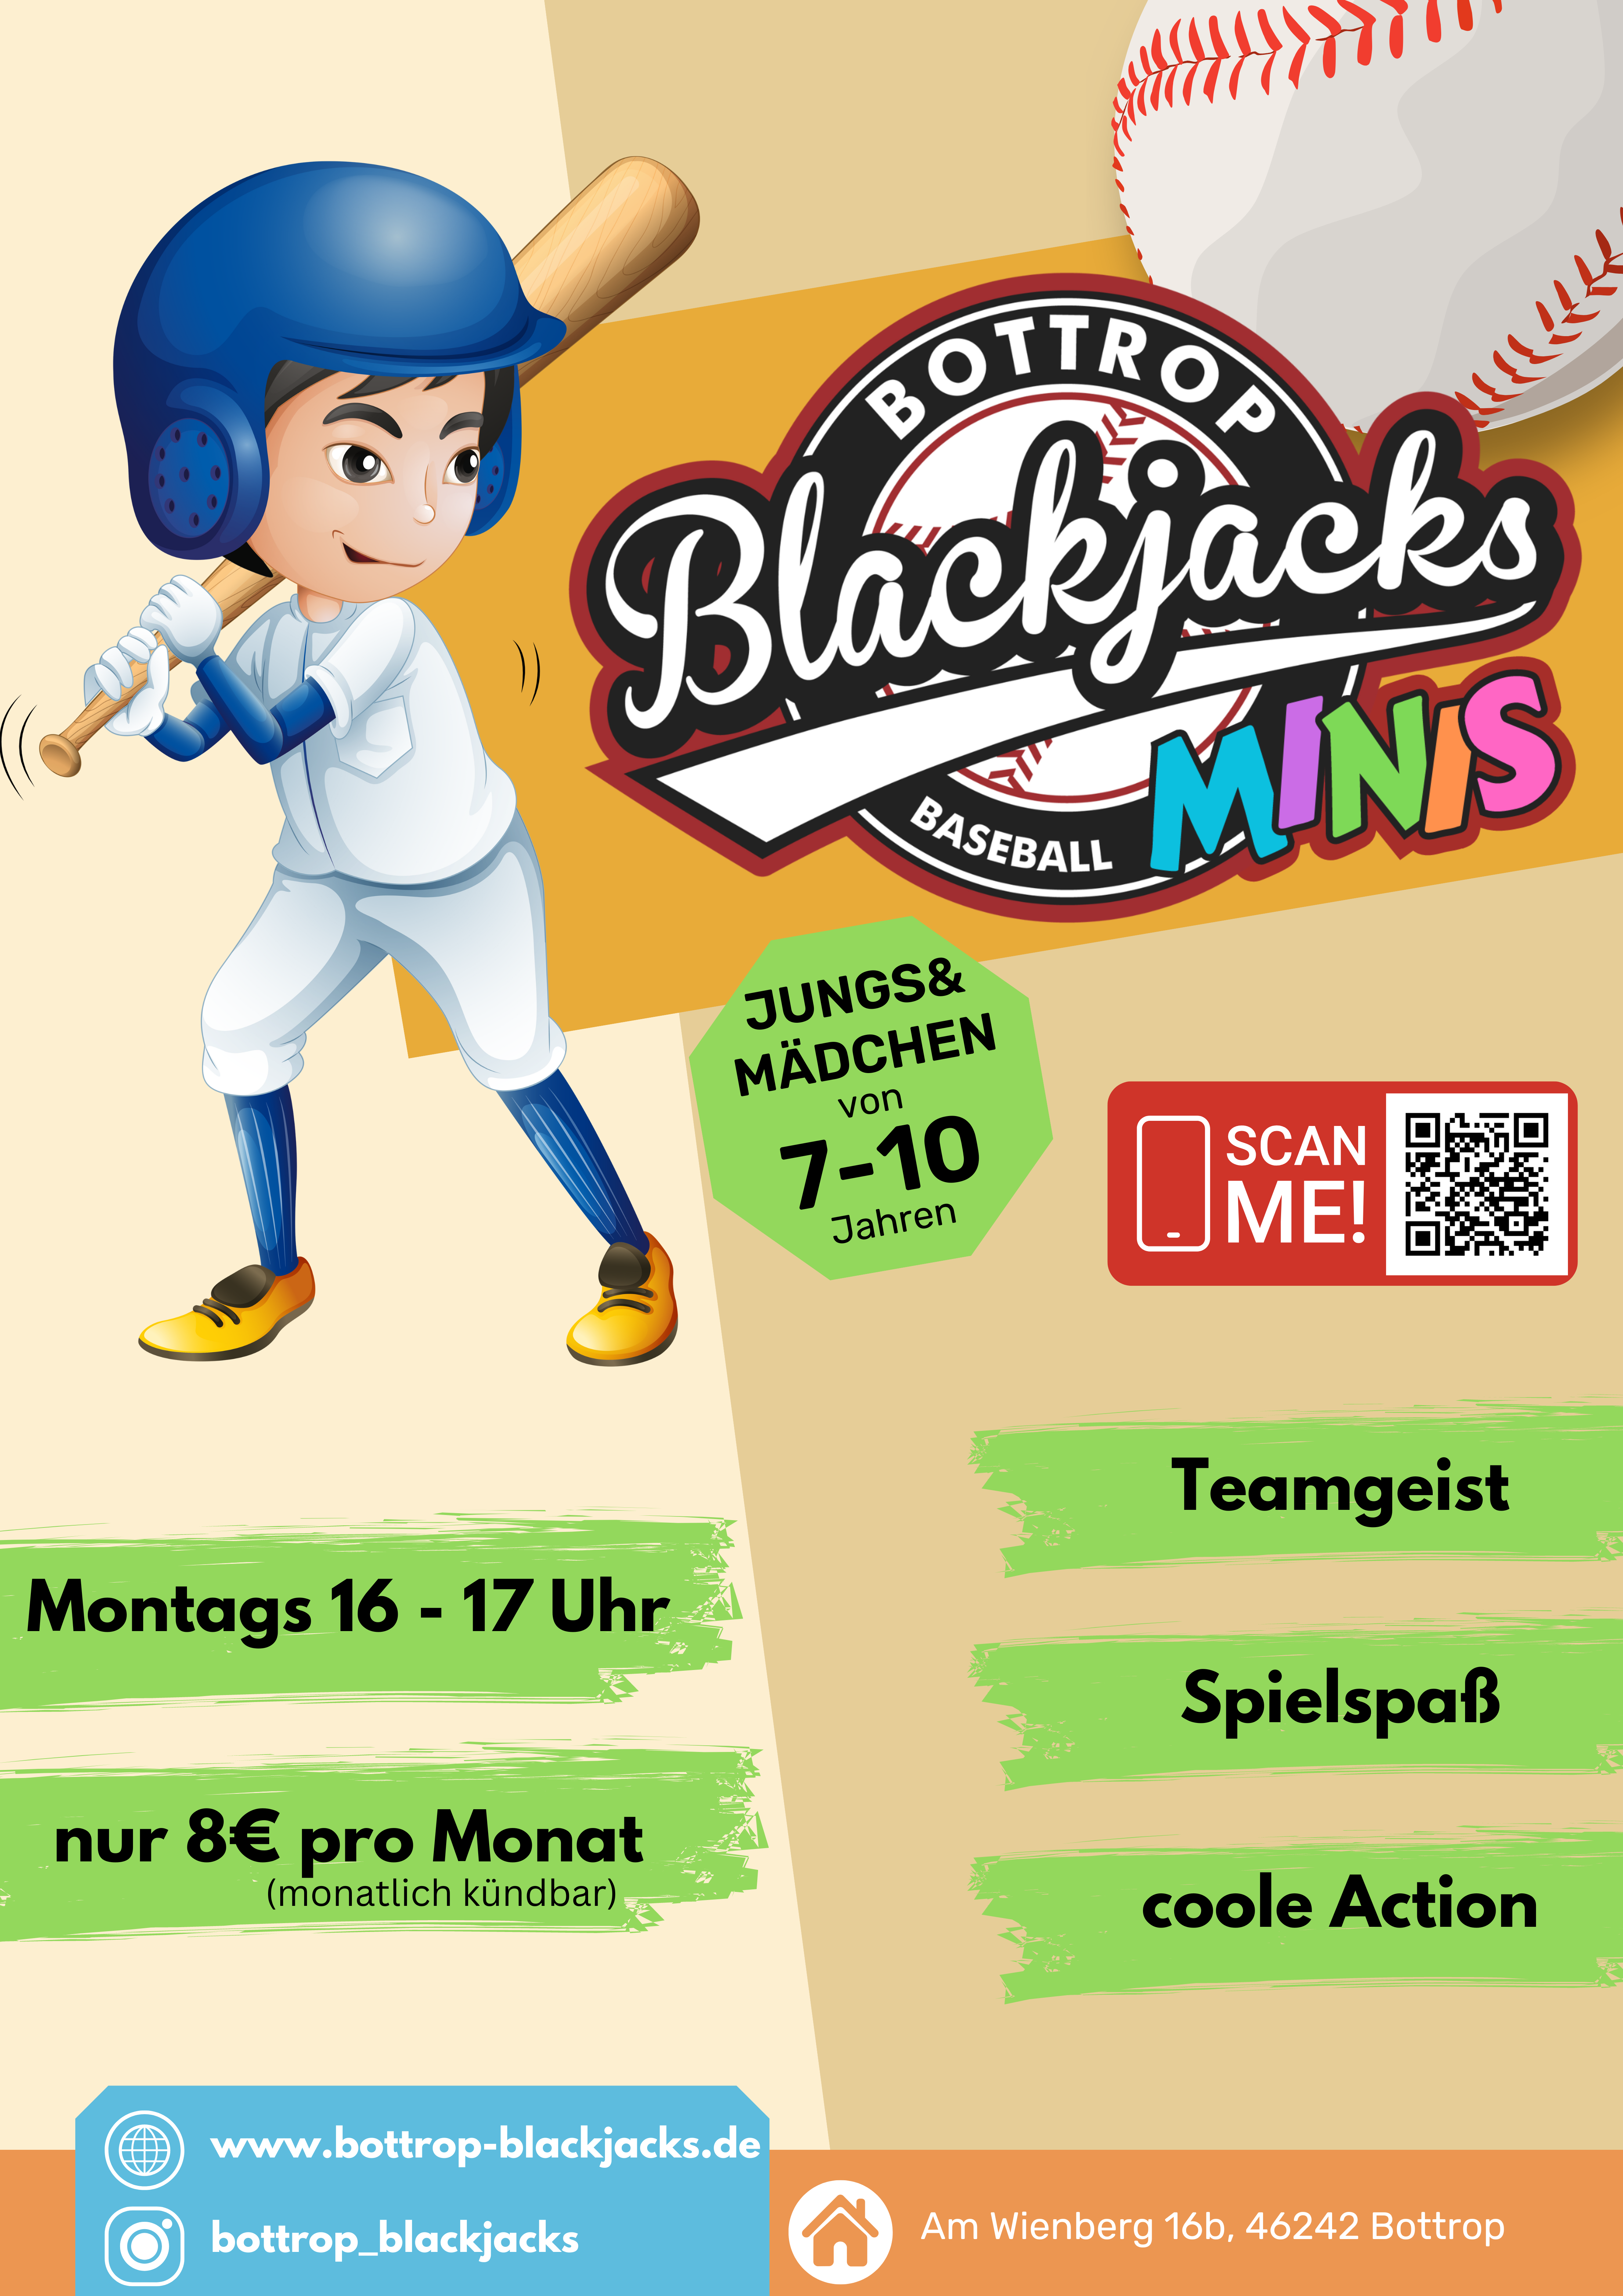 NEU: Start der Blackjacks U10-Kids – die Minis